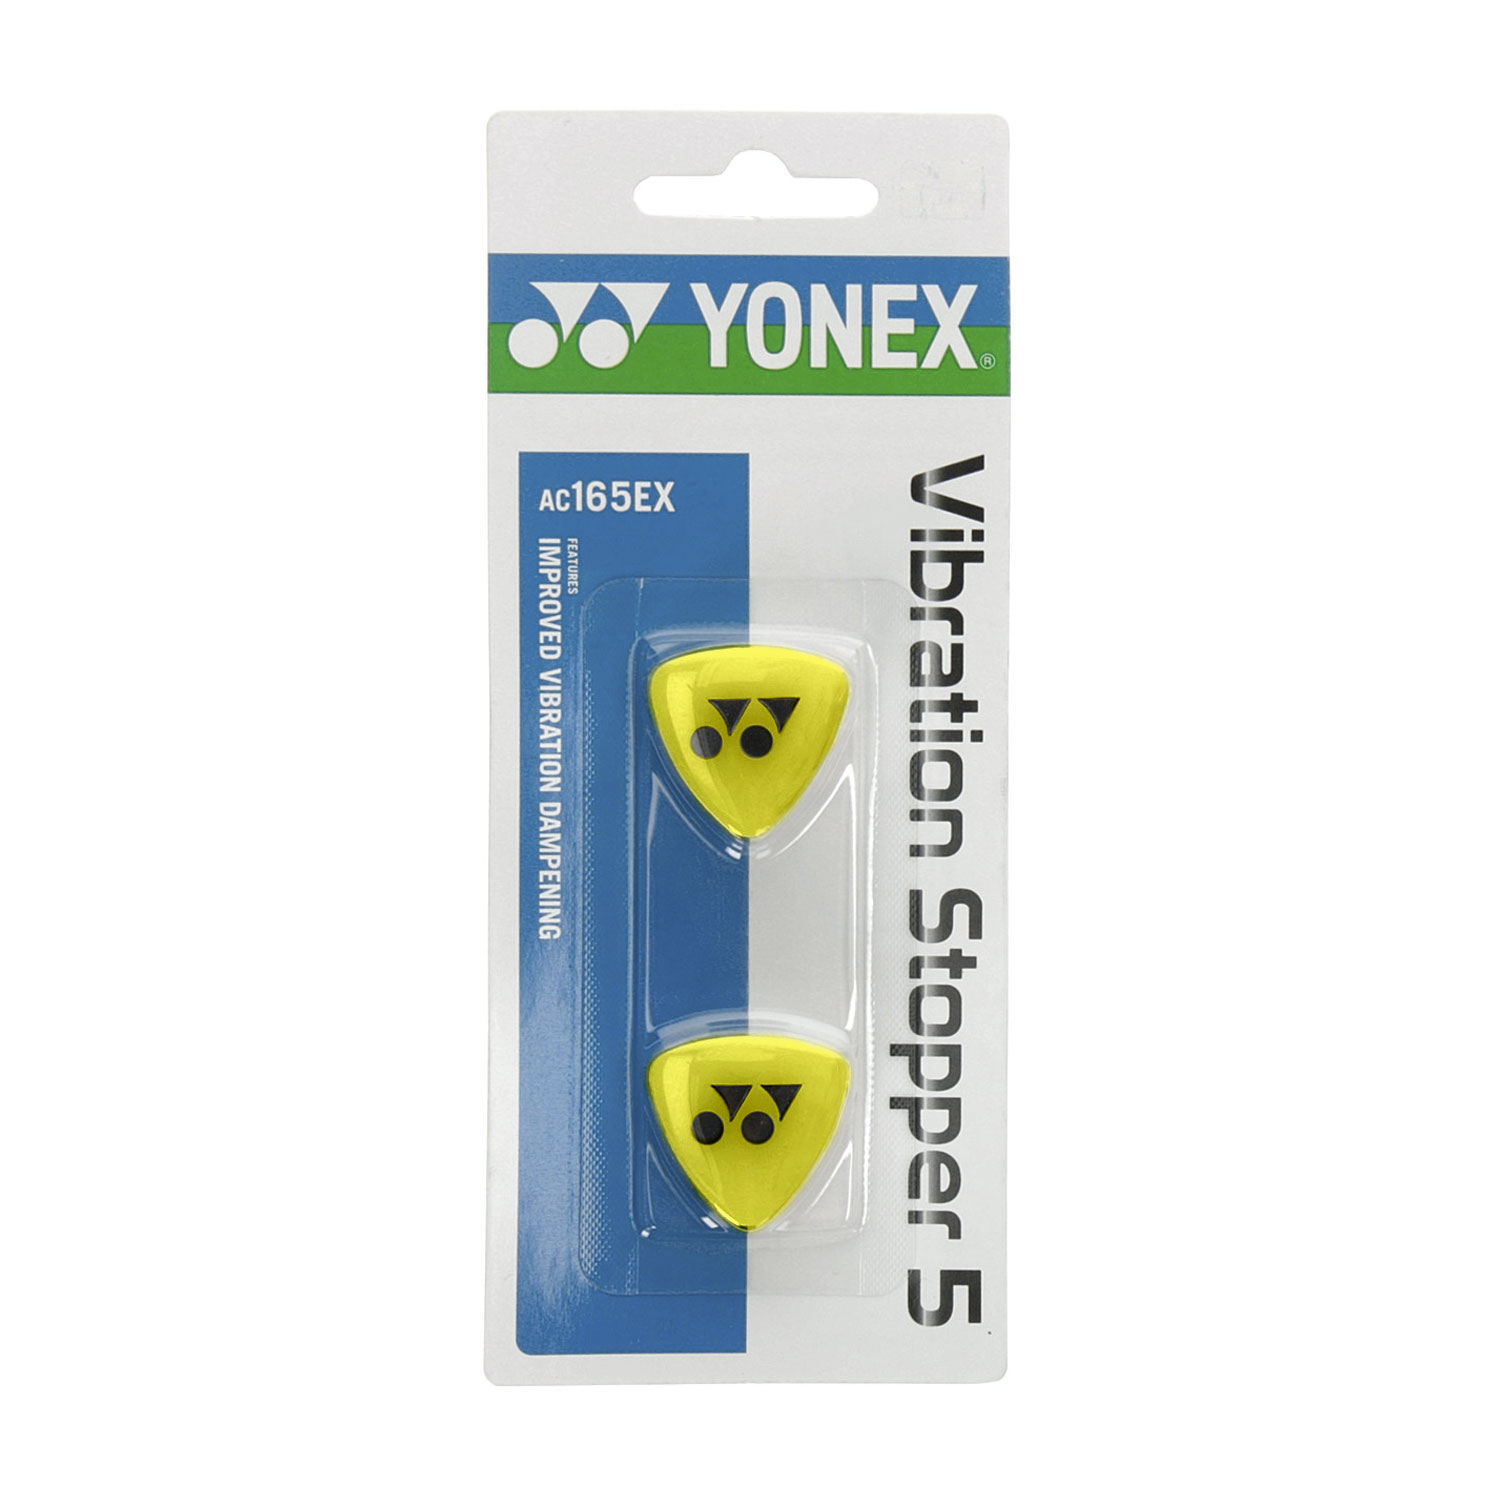 Yonex Vibration Stopper 5 Antivibrazioni - Black/Yellow